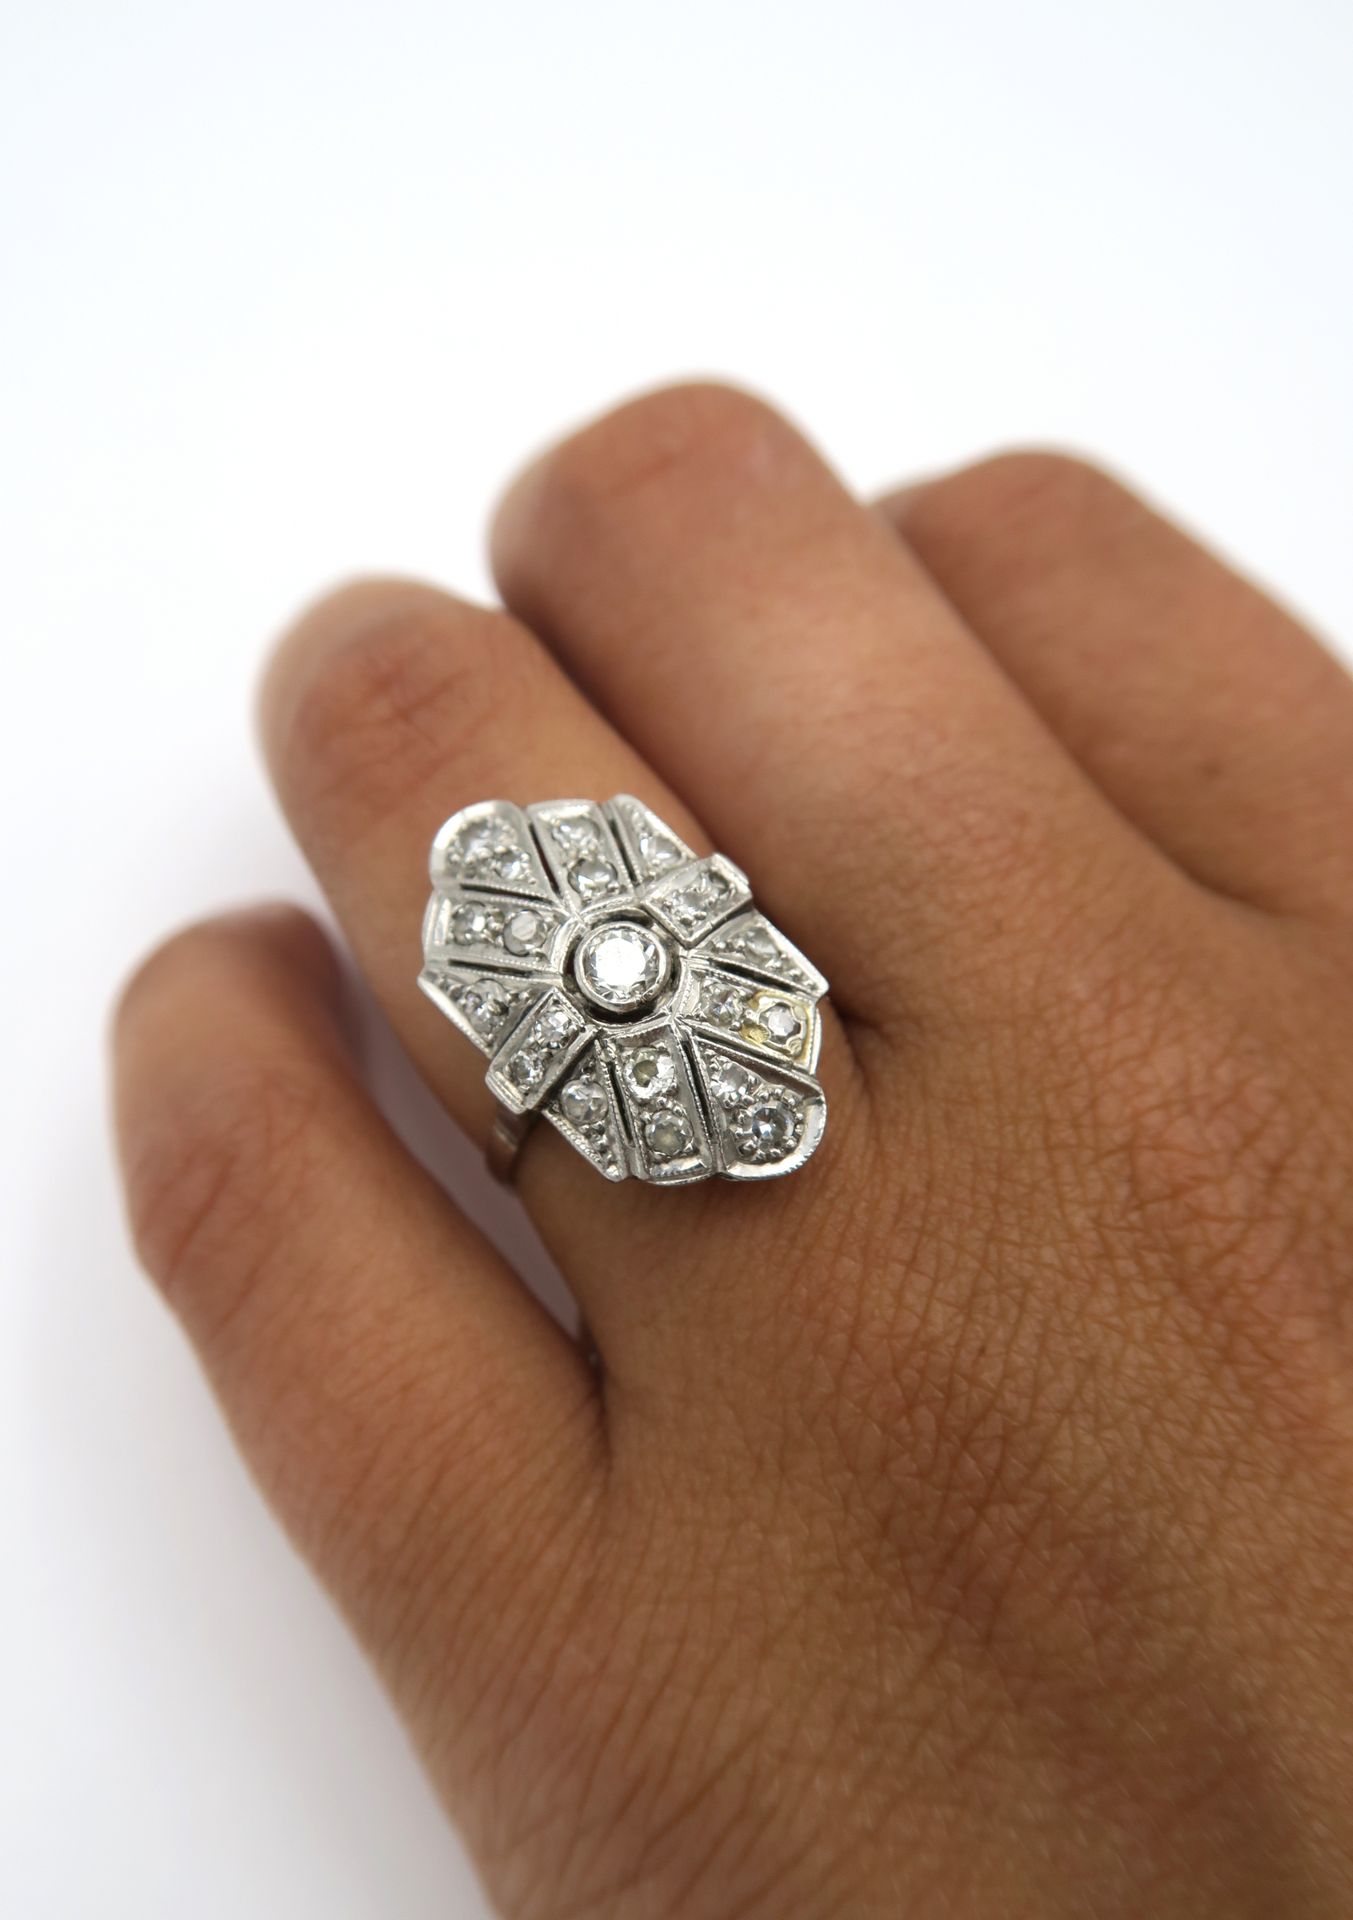 Null 
900°/00以上的装饰艺术铂金和白金戒指，长方形顶部镶嵌着圆形明亮式切割钻石。约1930年。戒指尺寸为21.60 x 14 mm。手指大小：54。&hellip;